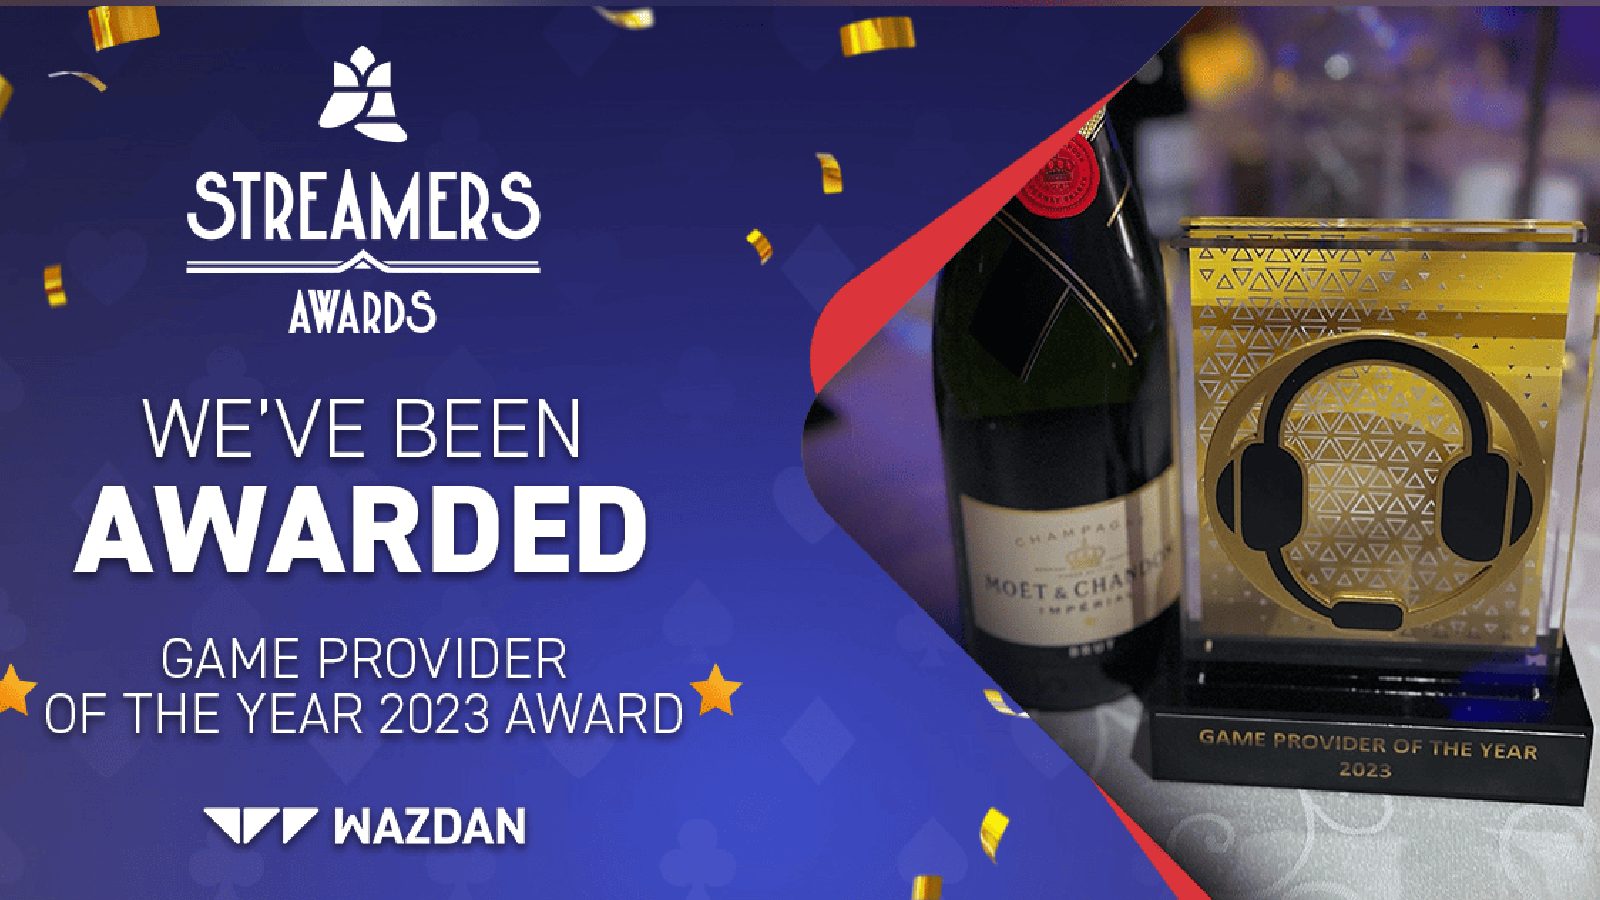 Wazdan - Game Provider of the Year 2023